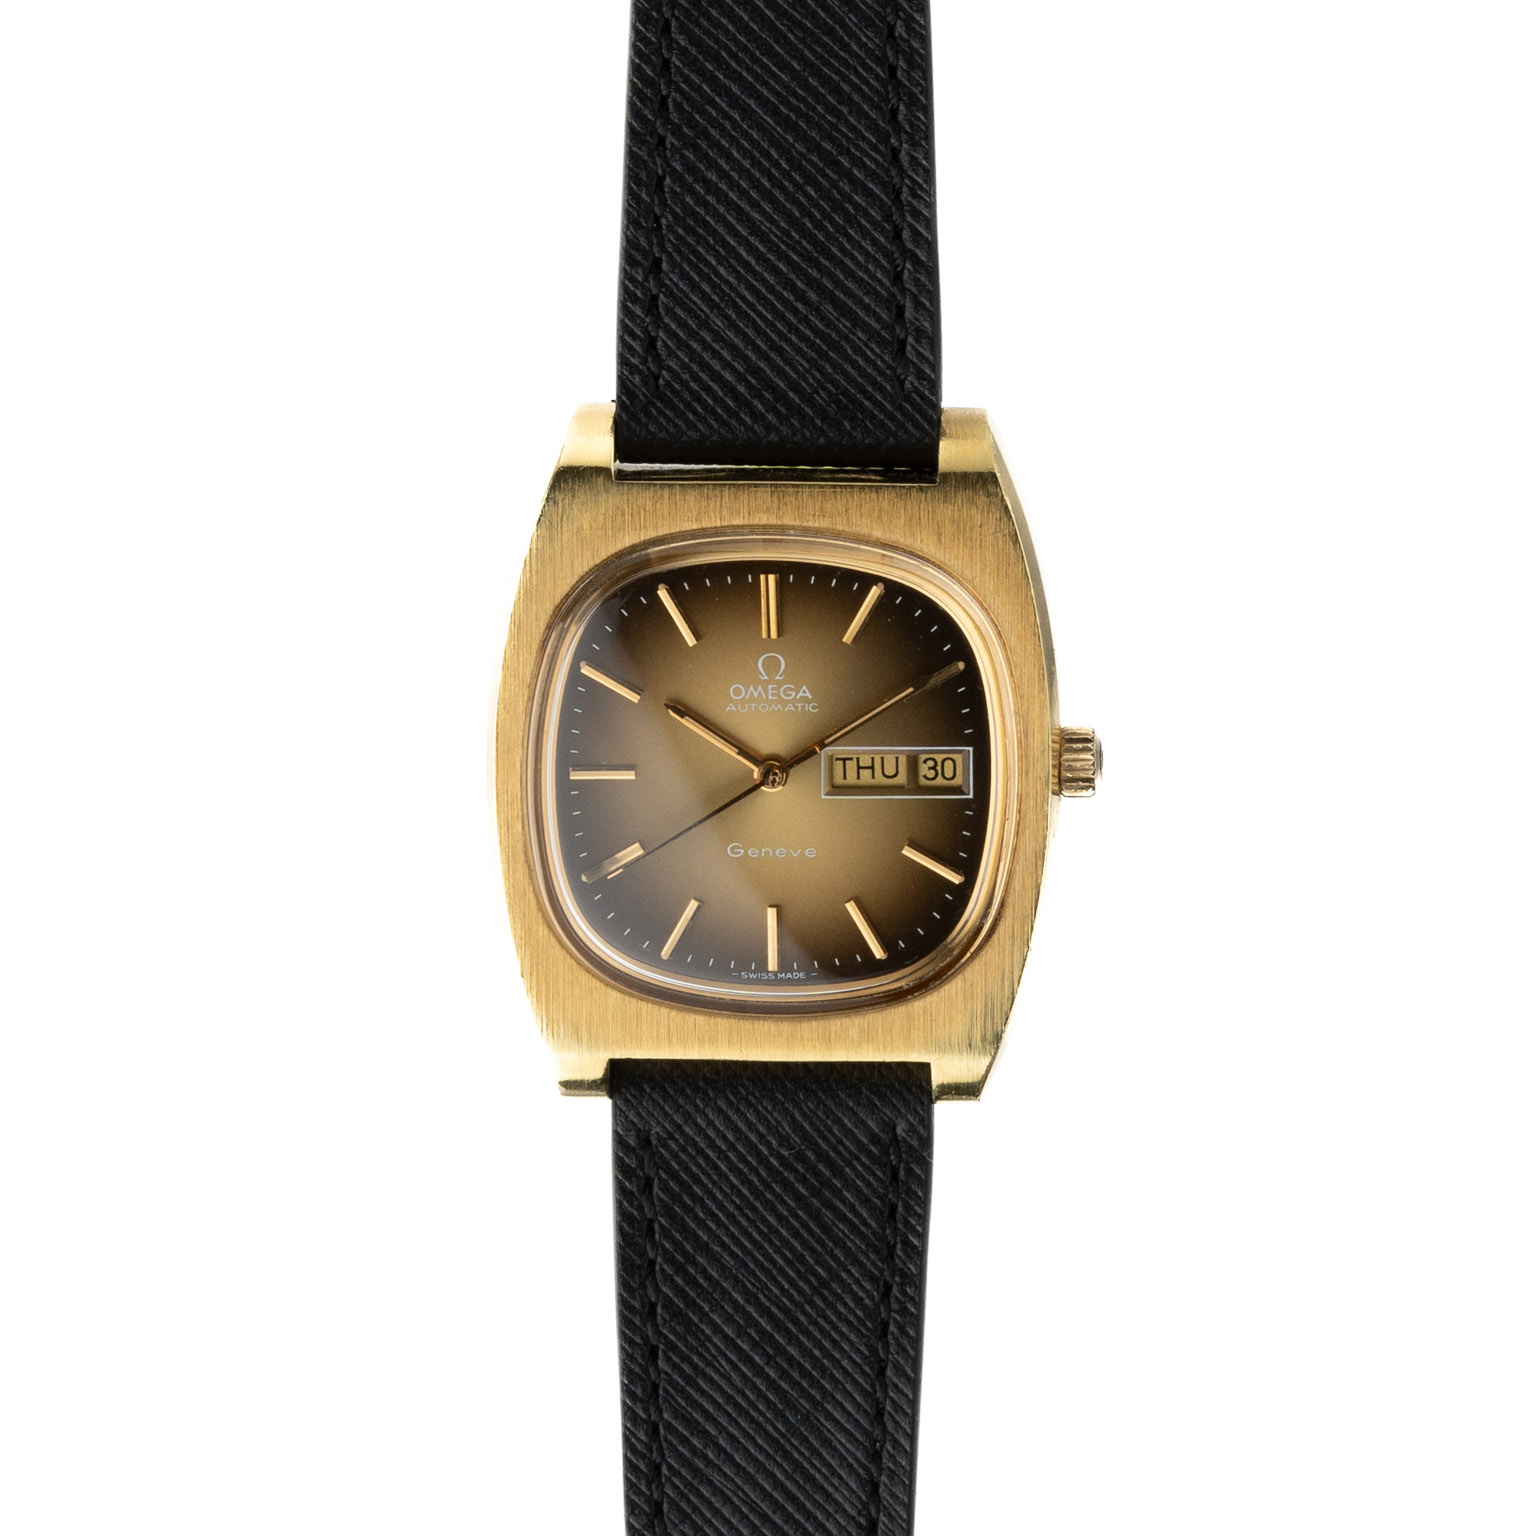 vintage omega 166.0188 bronze sunburst dial watch from 1973